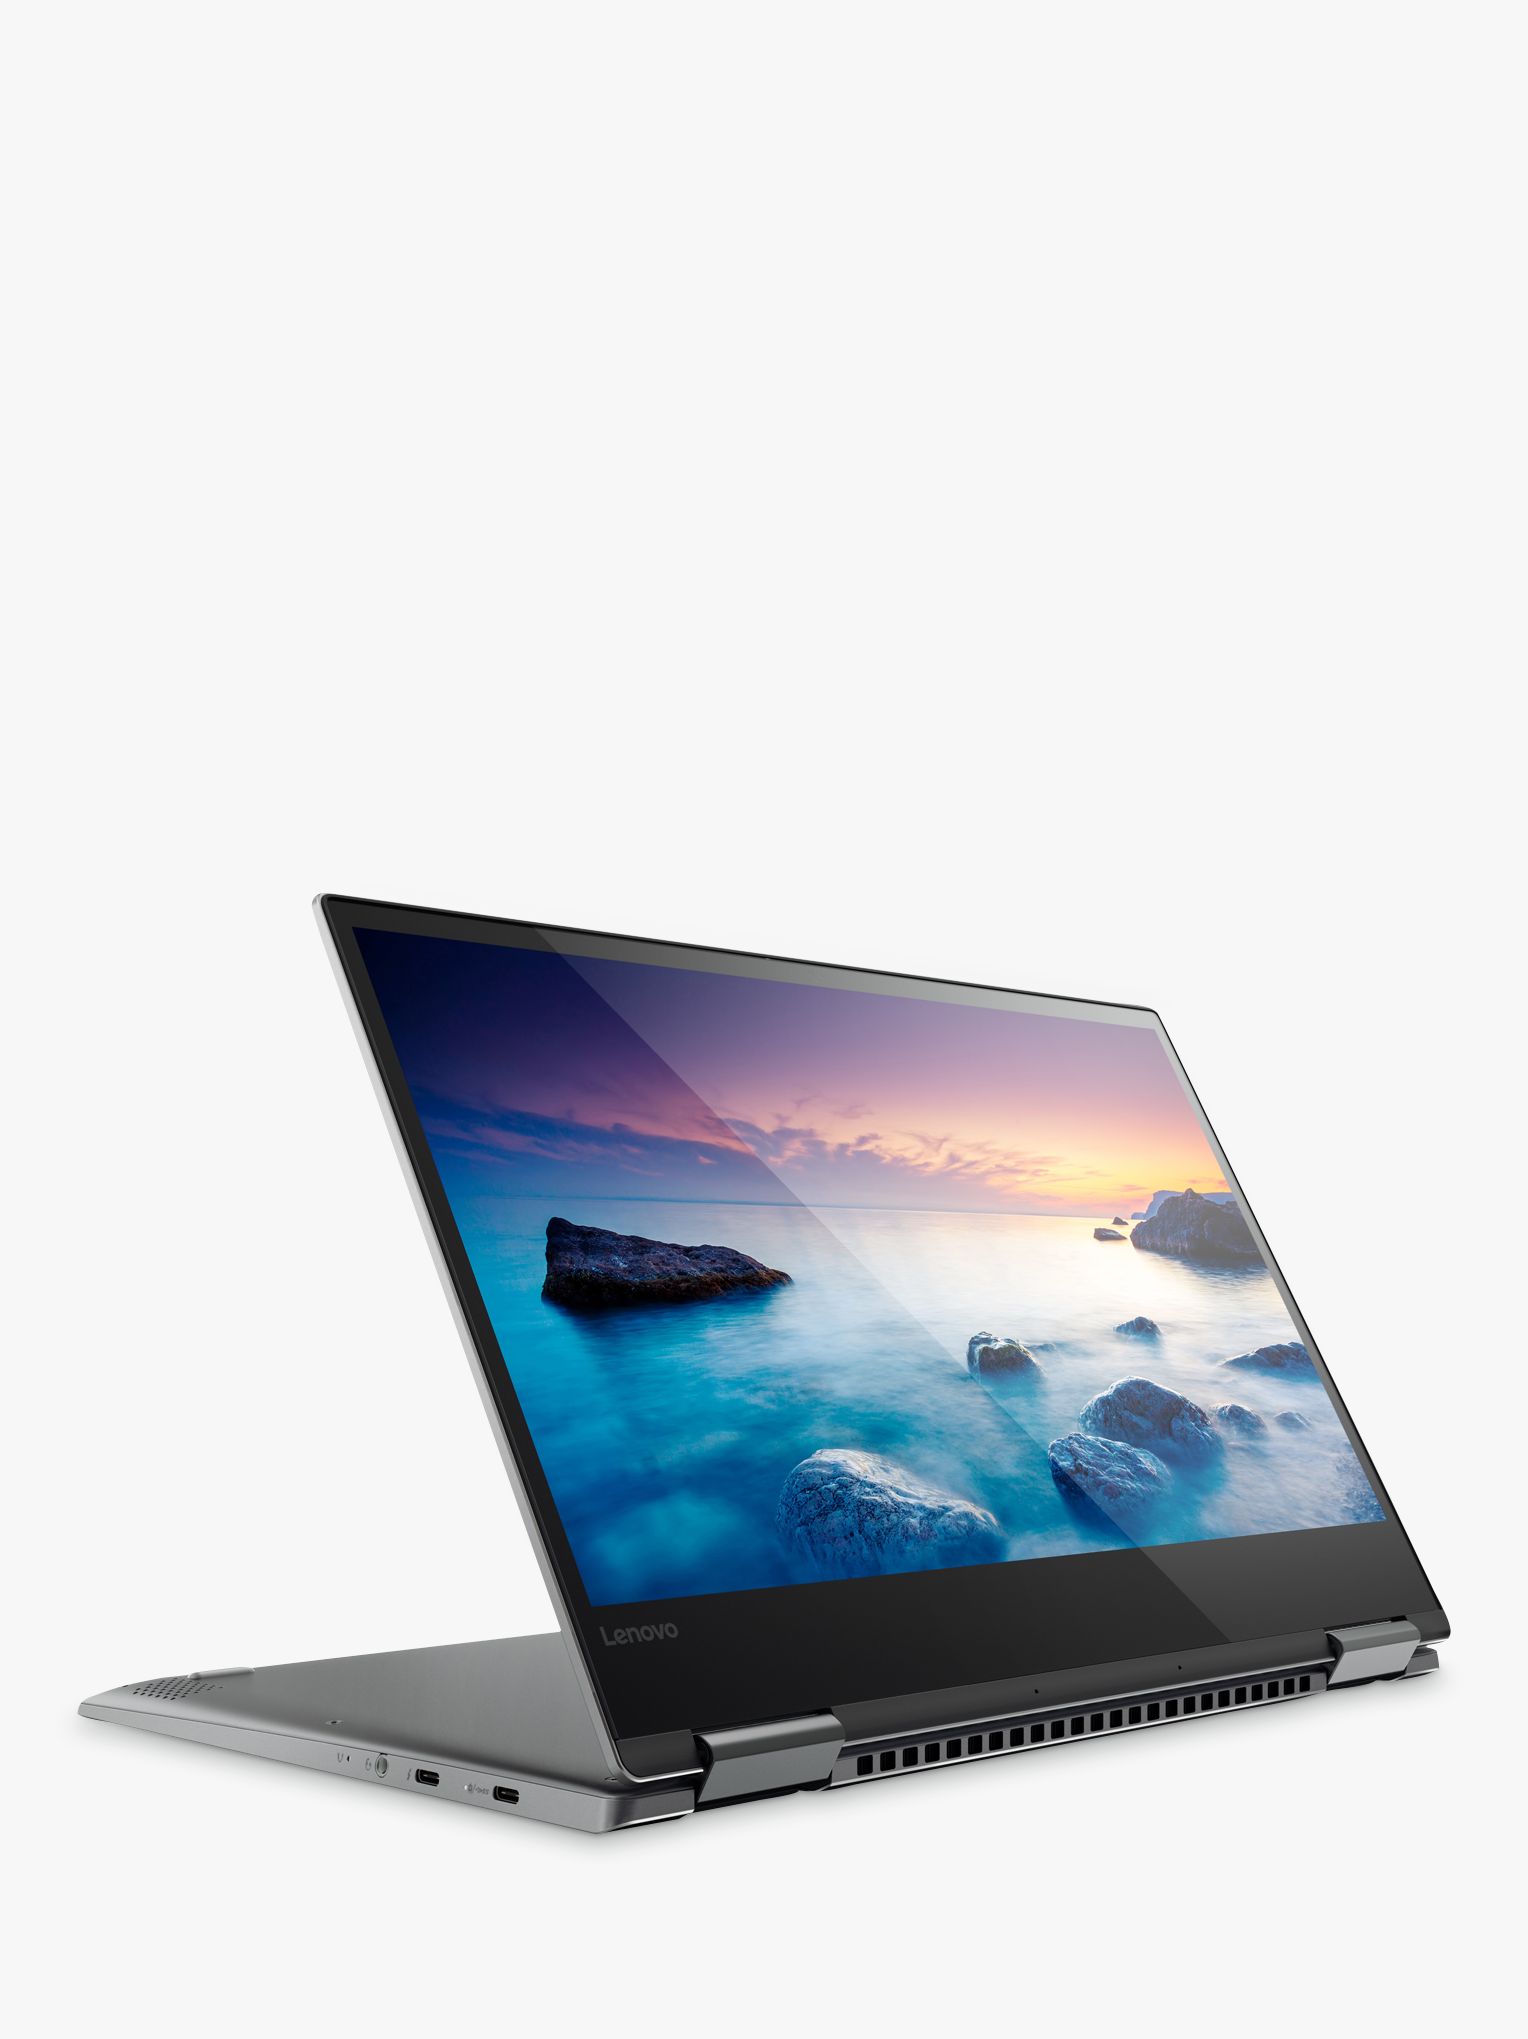 Lenovo Yoga 720 Convertible Laptop with Active Pen, Intel Core i7, 8GB RAM, 256GB SSD, 13.3 